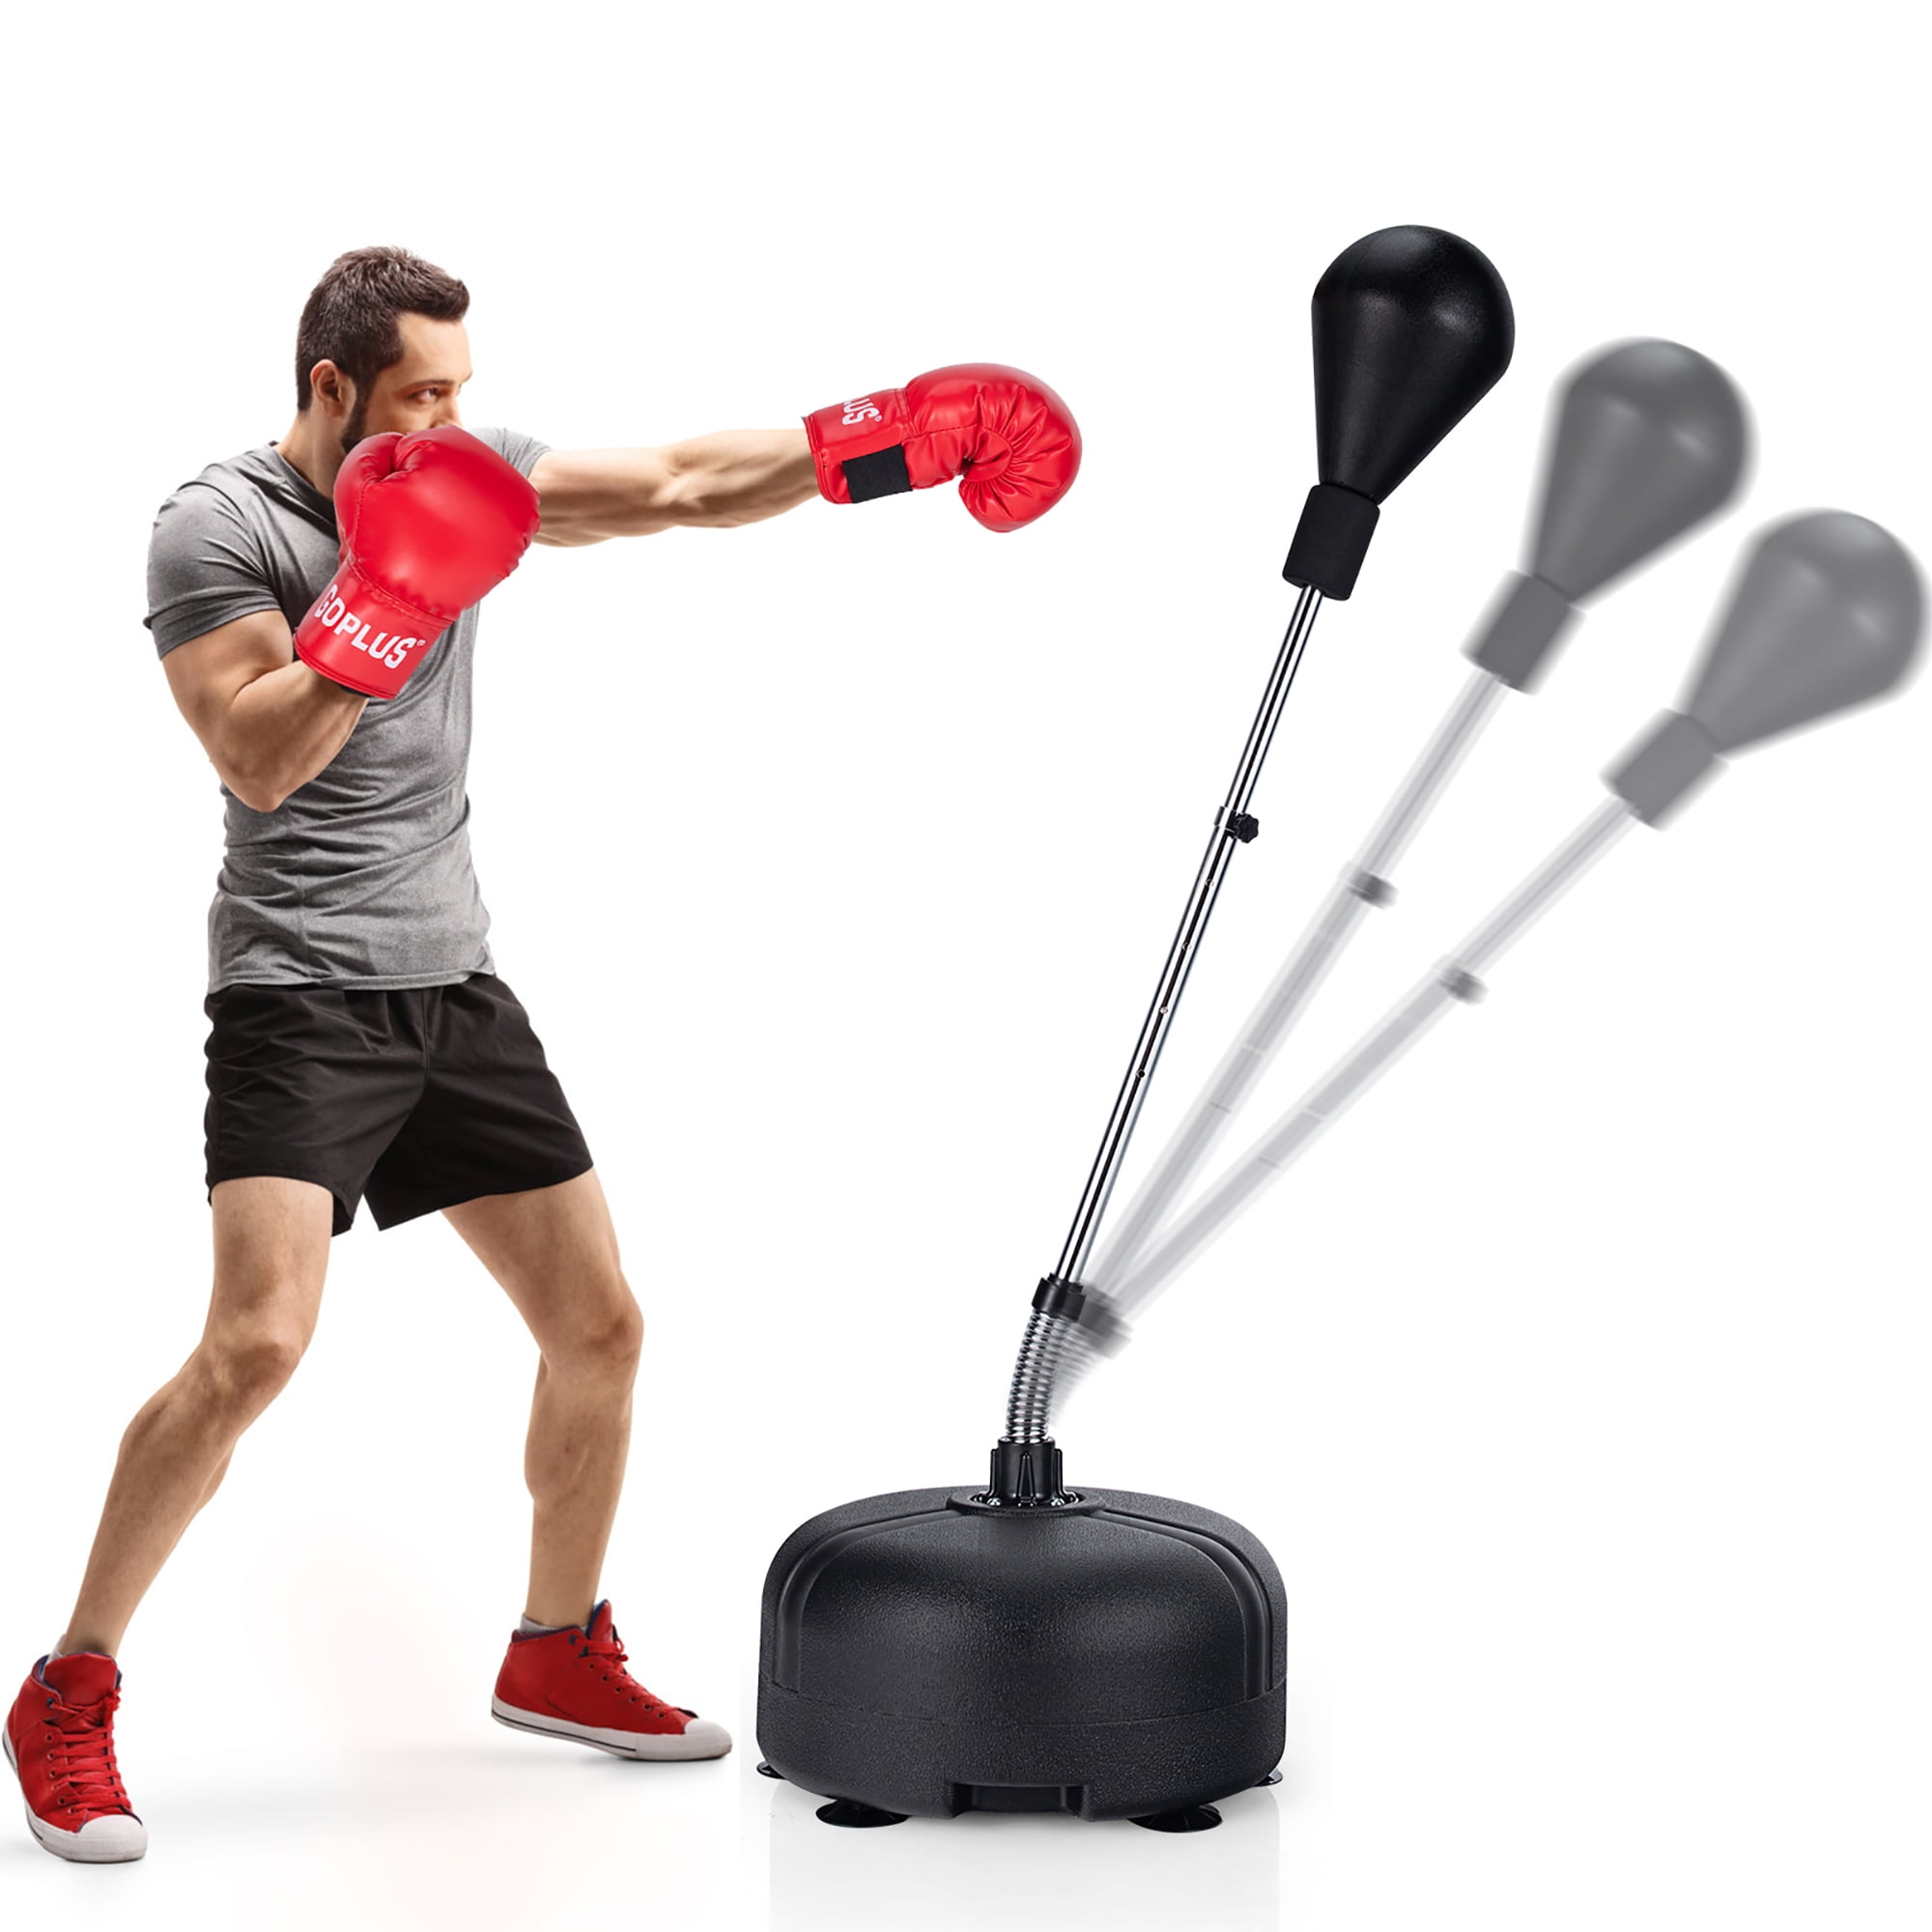 Free Standing Punching Speed Ball Boxing Adjustable Training Reflex Punching Bag 